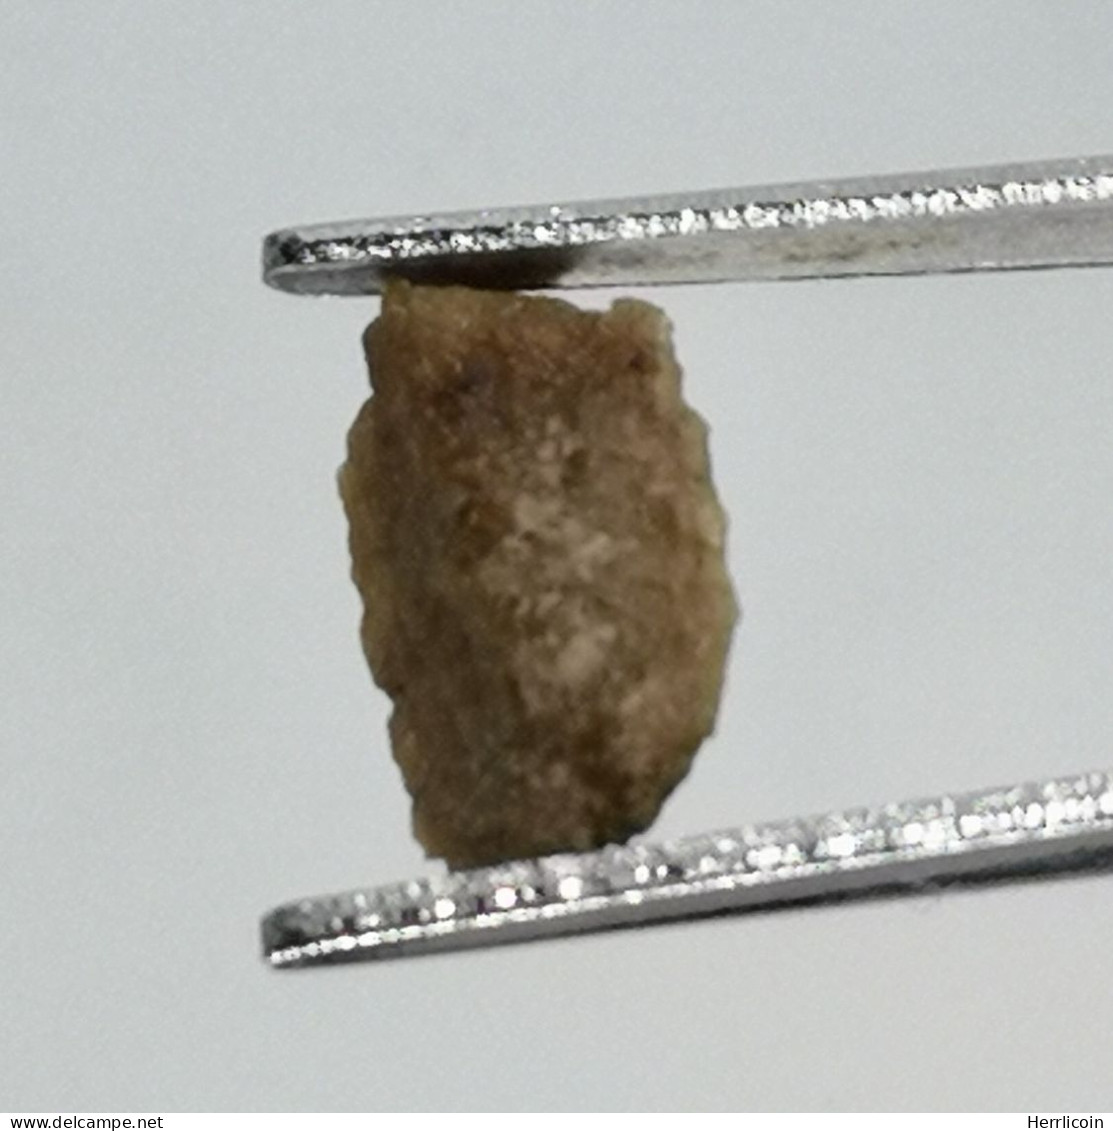 Sphène Brut De Birmanie - 1.35 Carat (0.27 Gramme) - Minerals